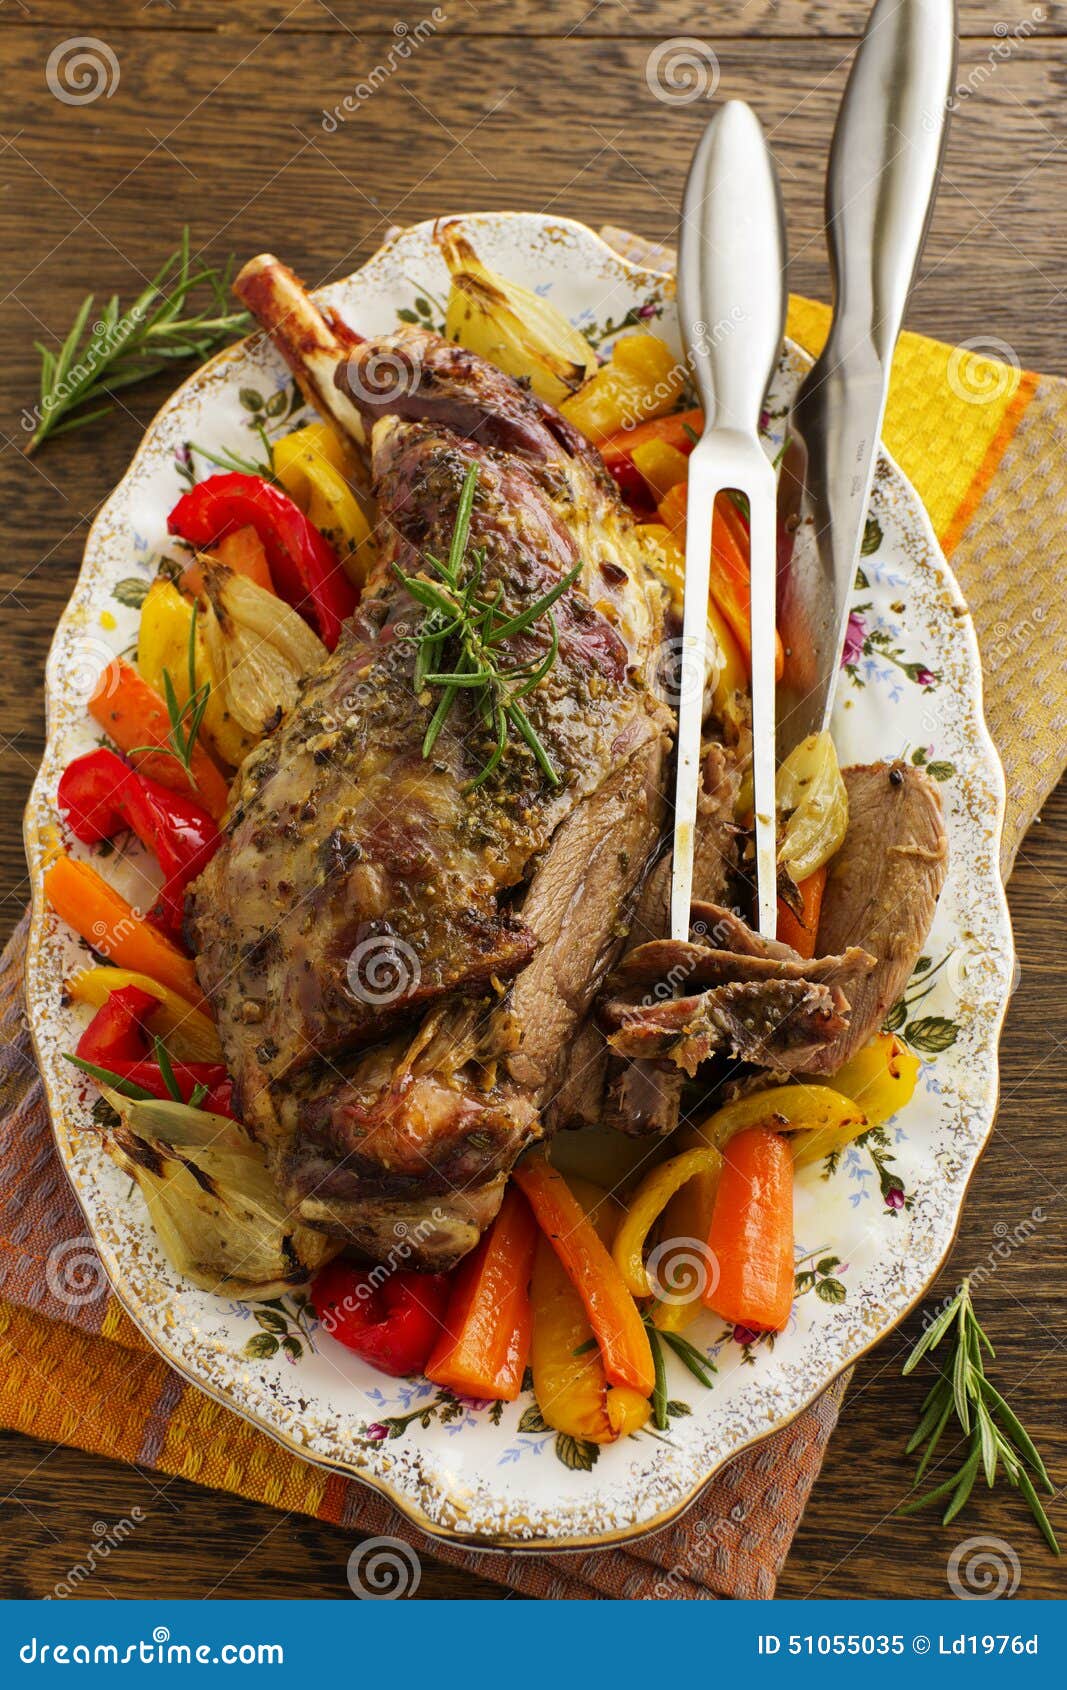 Roast Leg of Lamb with Rosemary and Garlic Stock Image - Image of ...